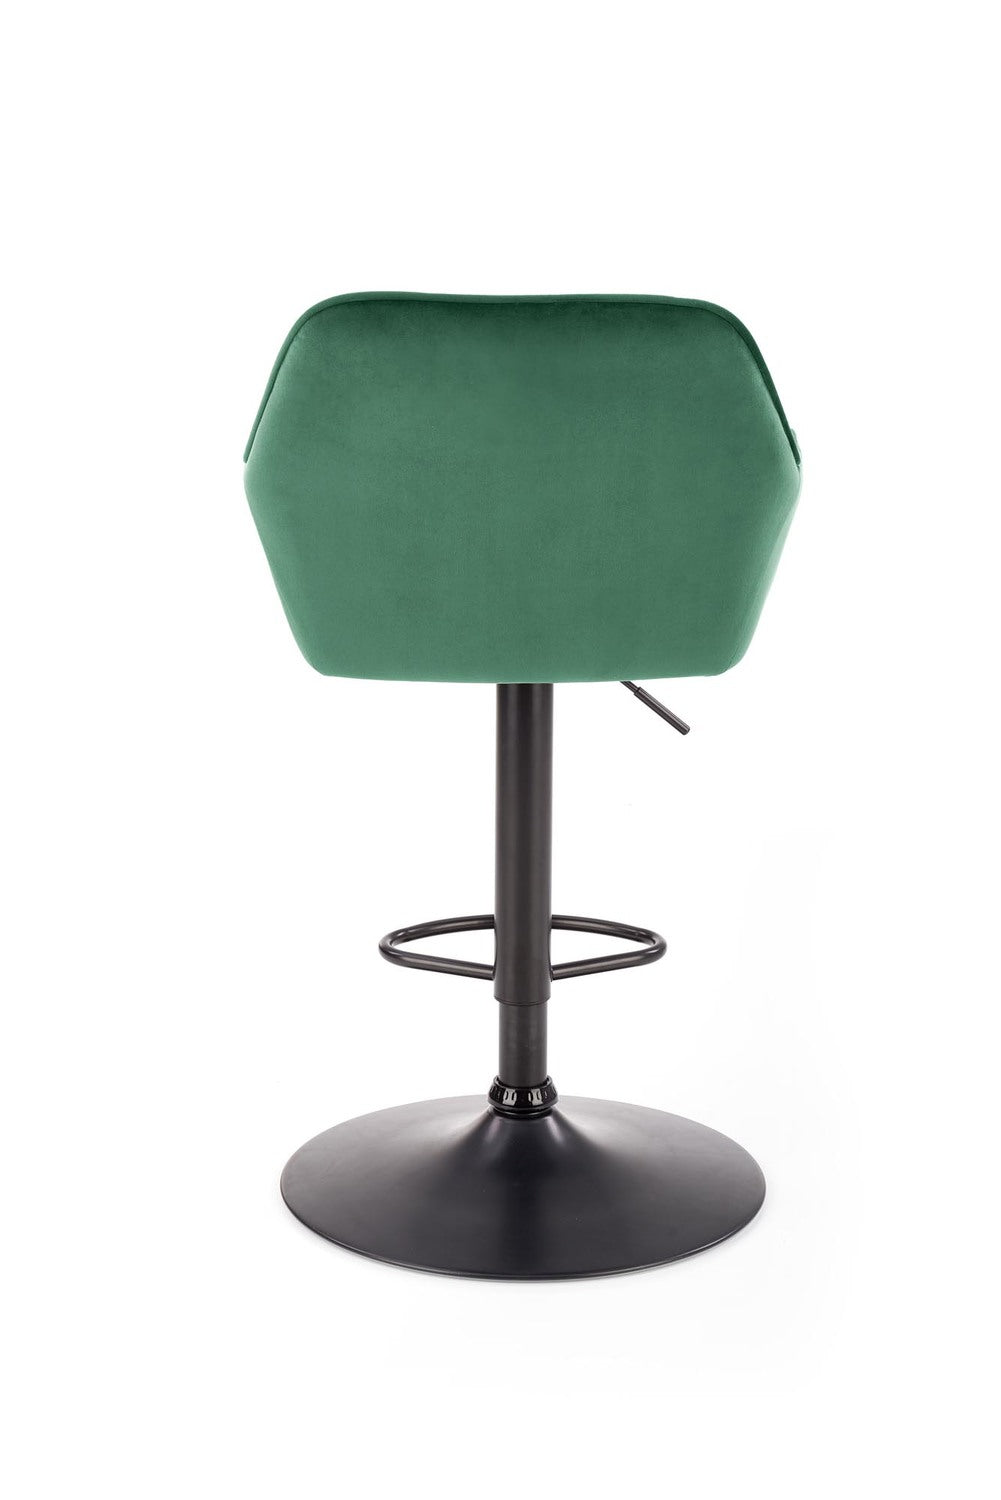 JA krēsls tumši zaļs 92-114/55/55/62-84 cm - N1 Home